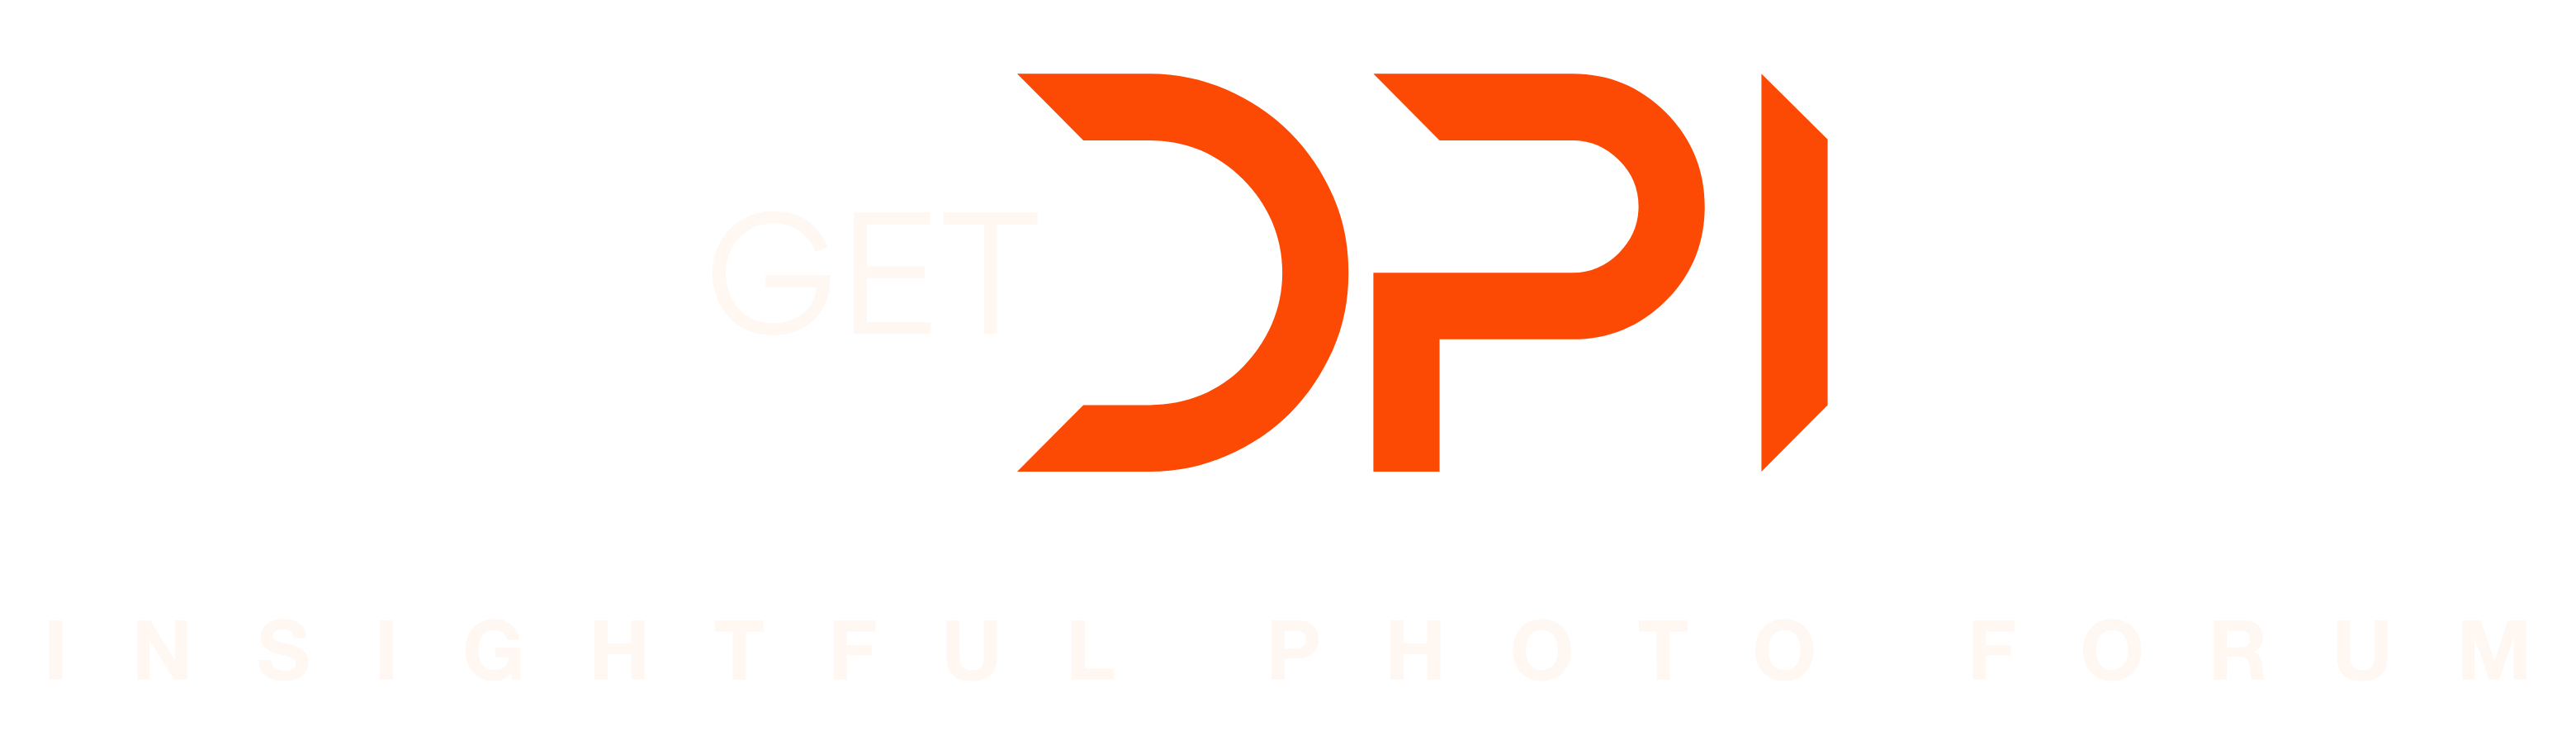 The GetDPI Photography Forum